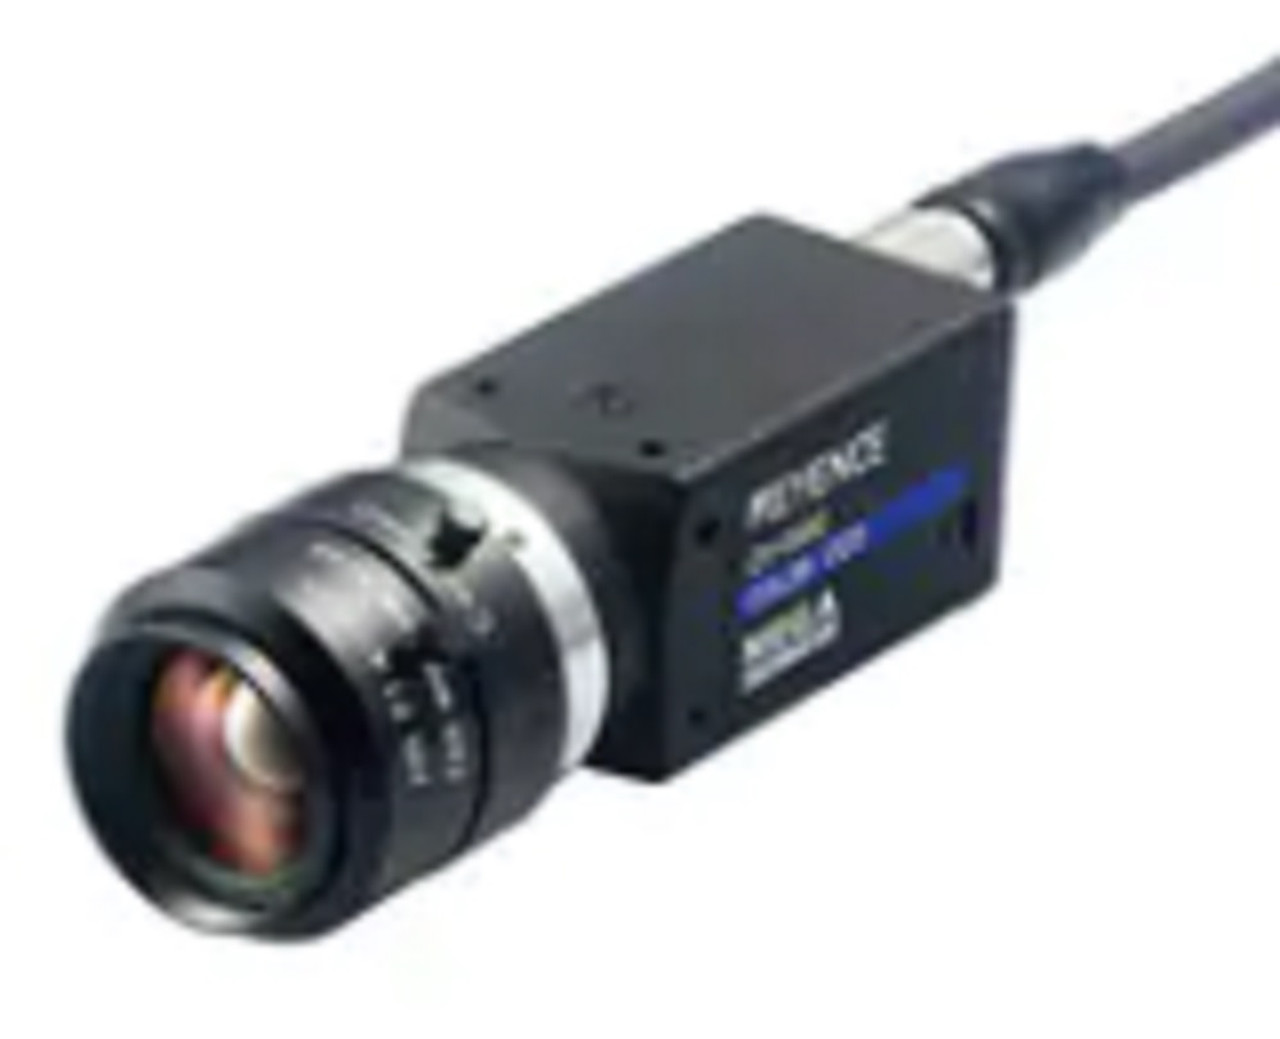 Keyence CV-200C Intuitive Machine Vision System, Digital 2M-Pixel Color Camera [Refurbished]